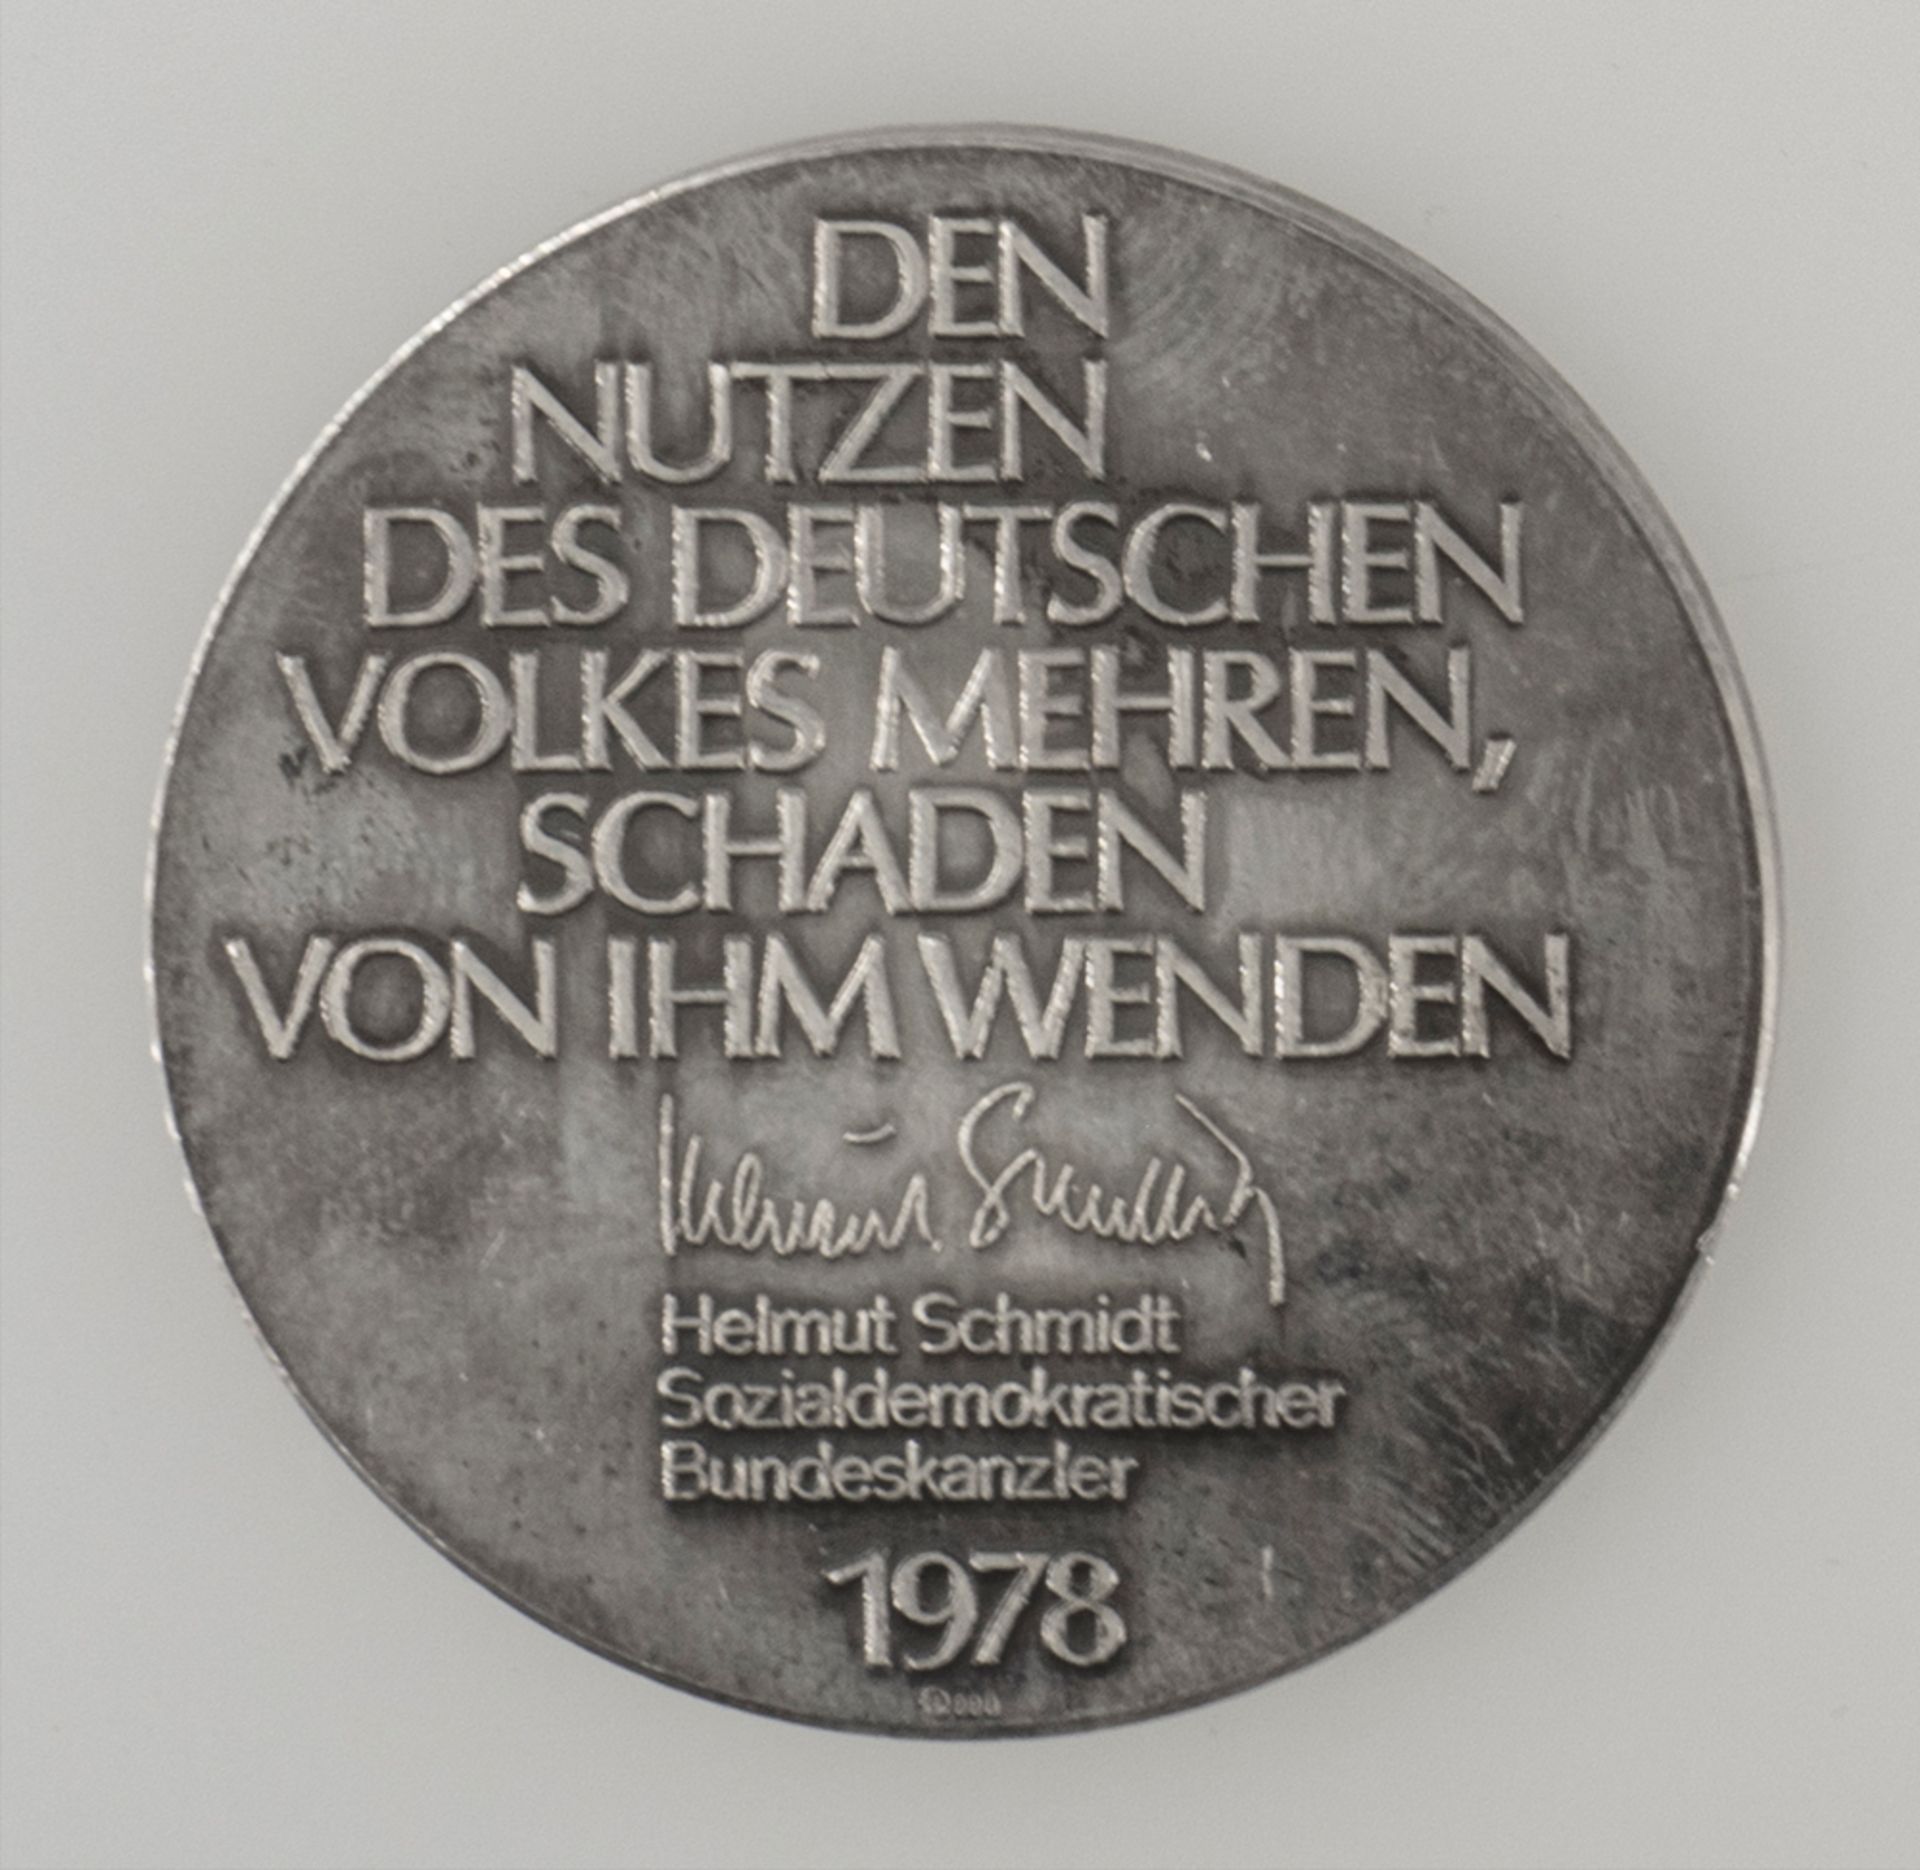 Silber - Medaille "Helmut Schmidt". Silber 999. Durchmesser: ca. 50 mm. - Bild 2 aus 2